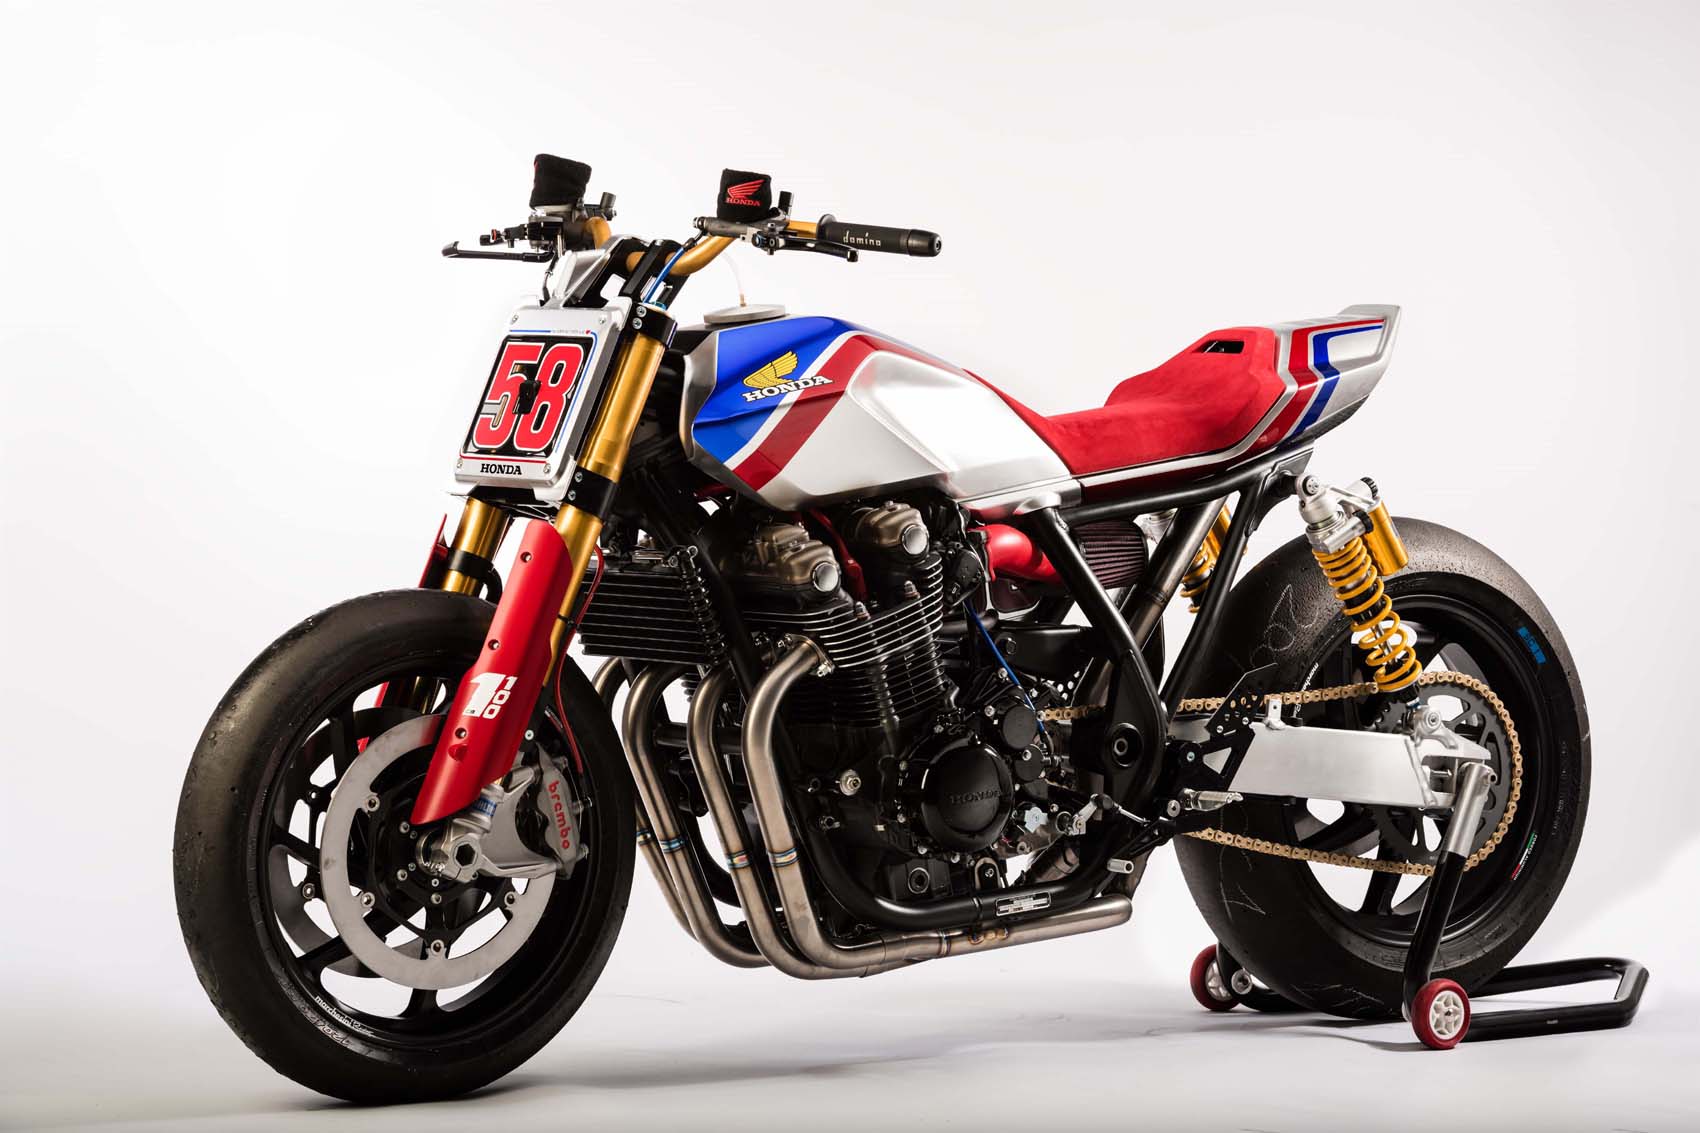 wordlessTech | Honda Super 90 concept motorcycle